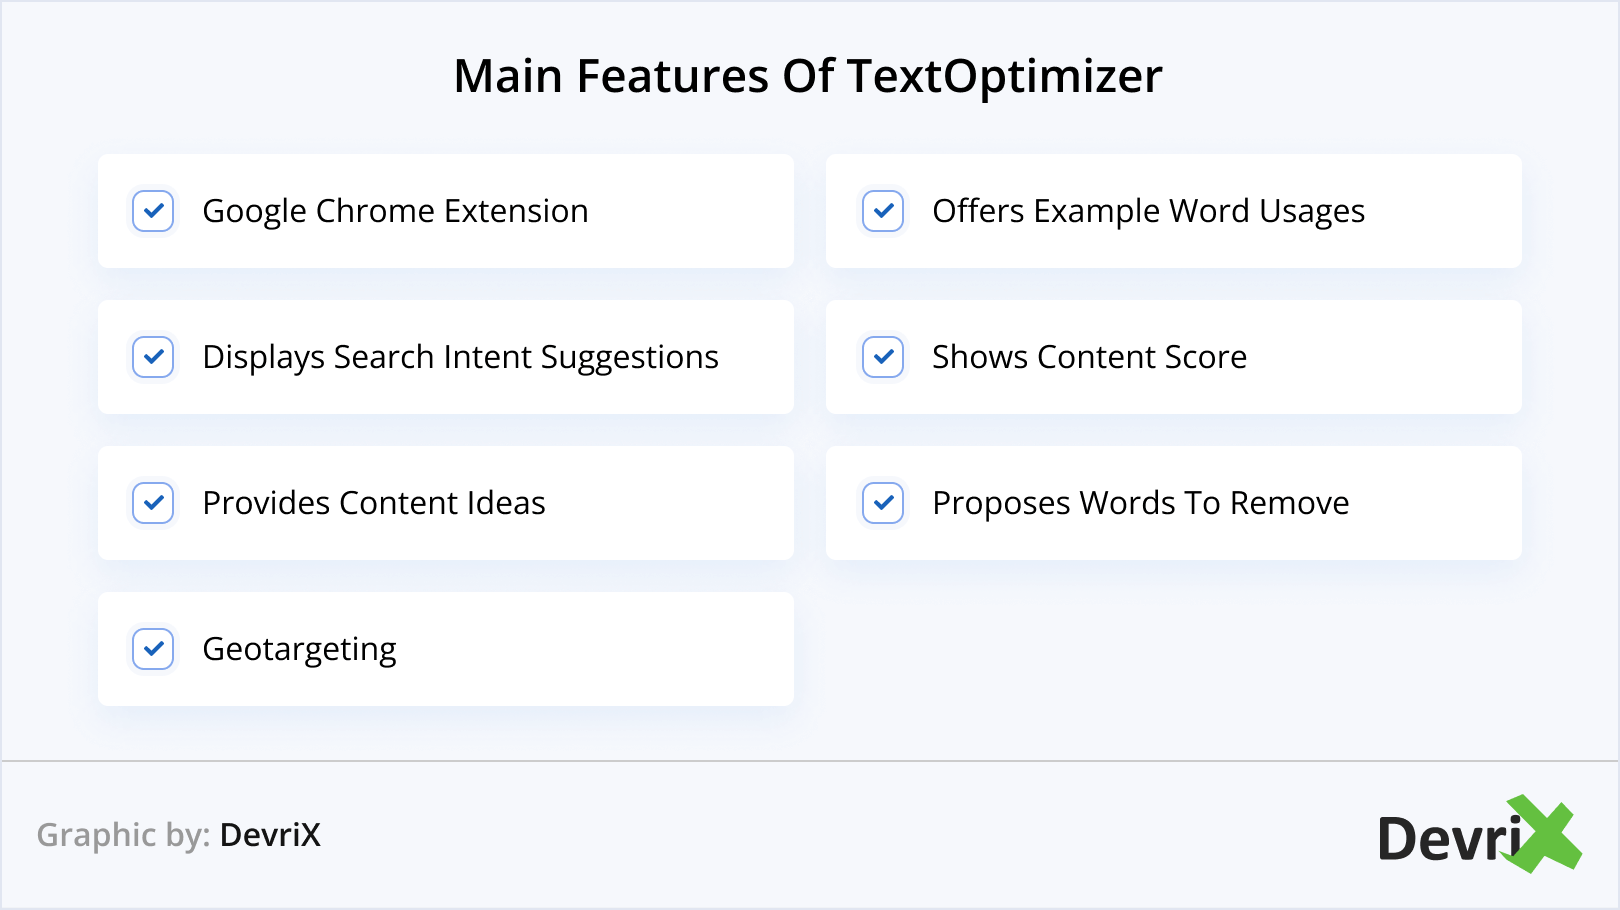 1. Main Features of TextOptimizer